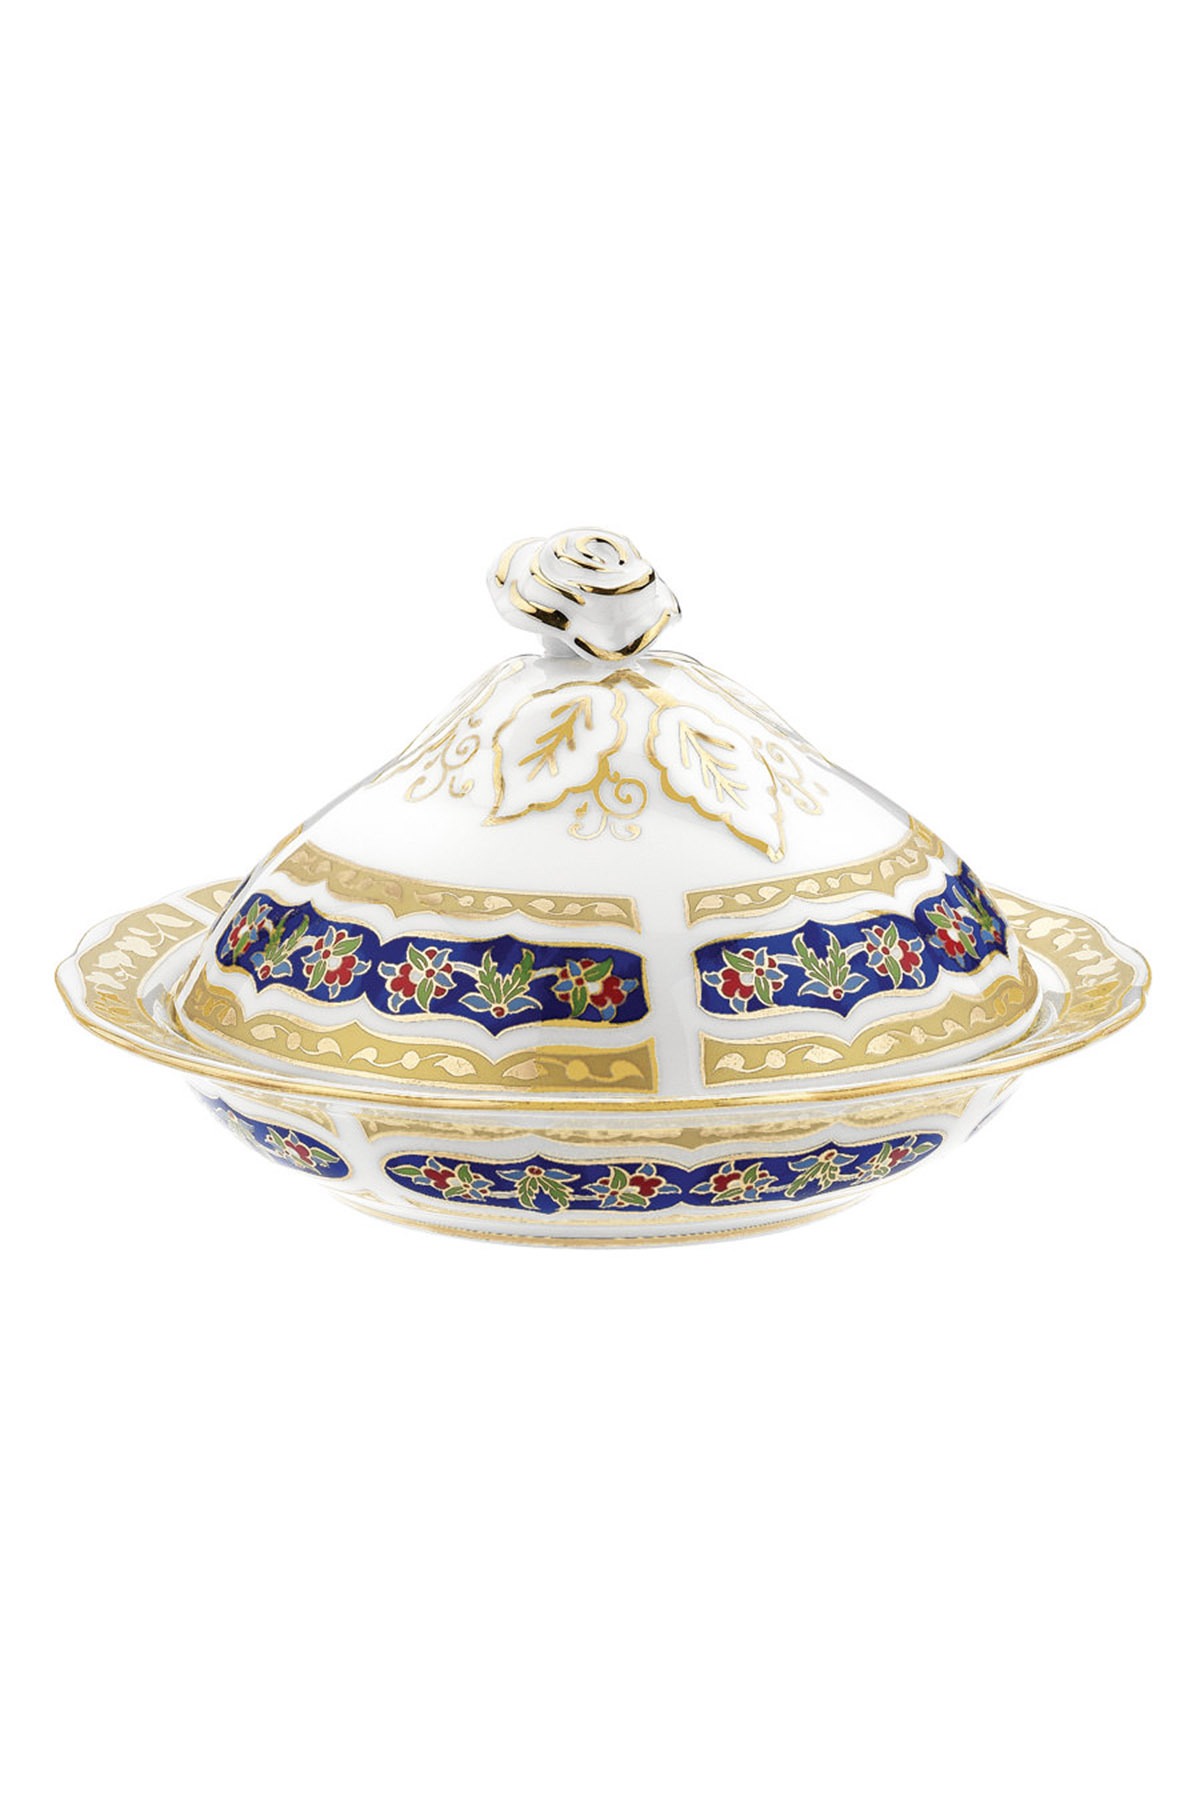 Kütahya Porselen Sultan Şekerlik 20 cm Dekor No:3880 - 1